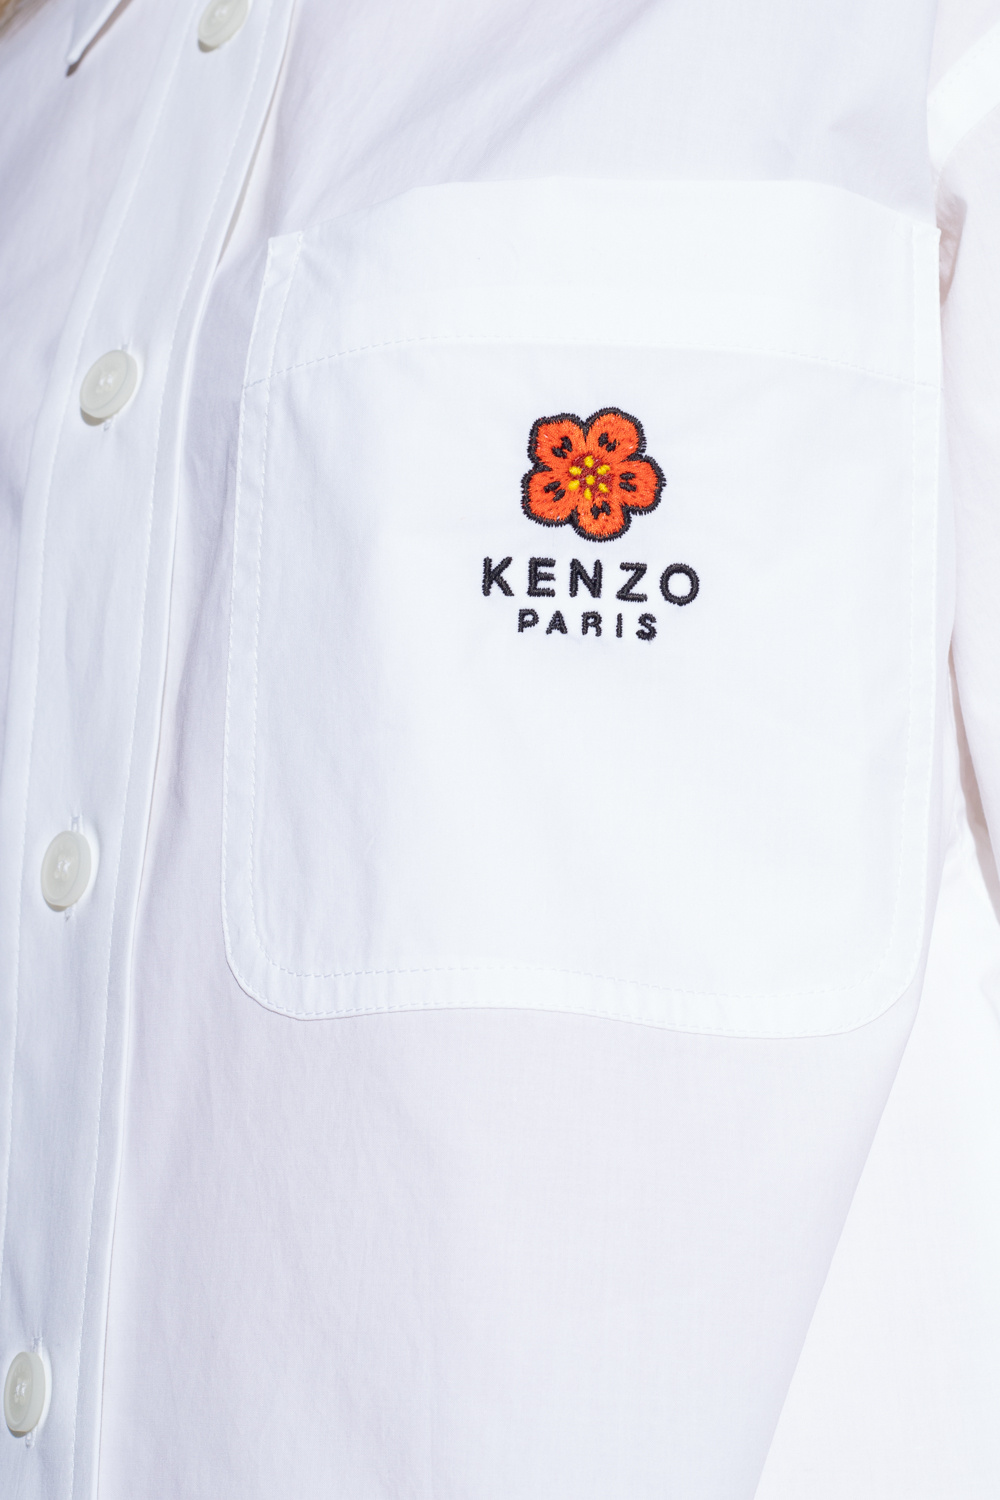 Kenzo soulland damon shirt magola white red stripes